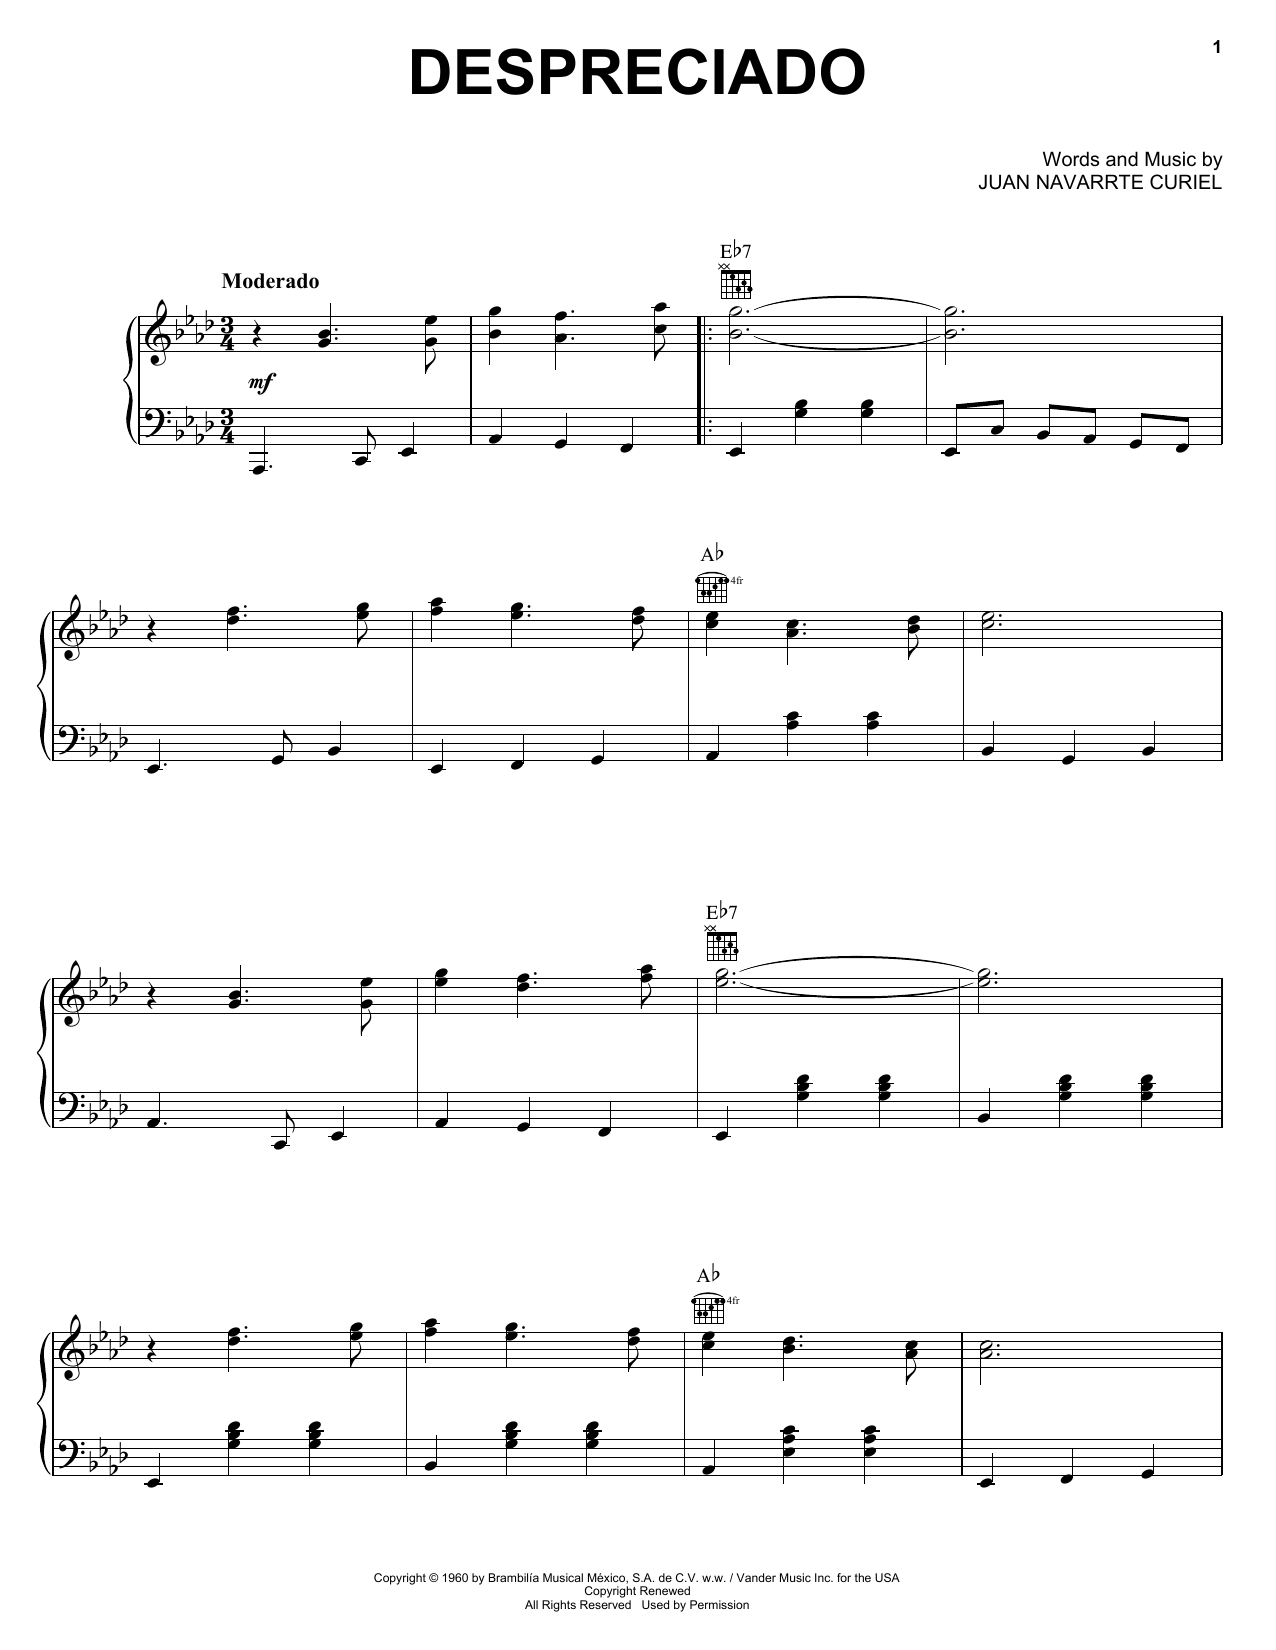 Juan Navarrte Curiel Despreciado Sheet Music Notes & Chords for Piano, Vocal & Guitar (Right-Hand Melody) - Download or Print PDF